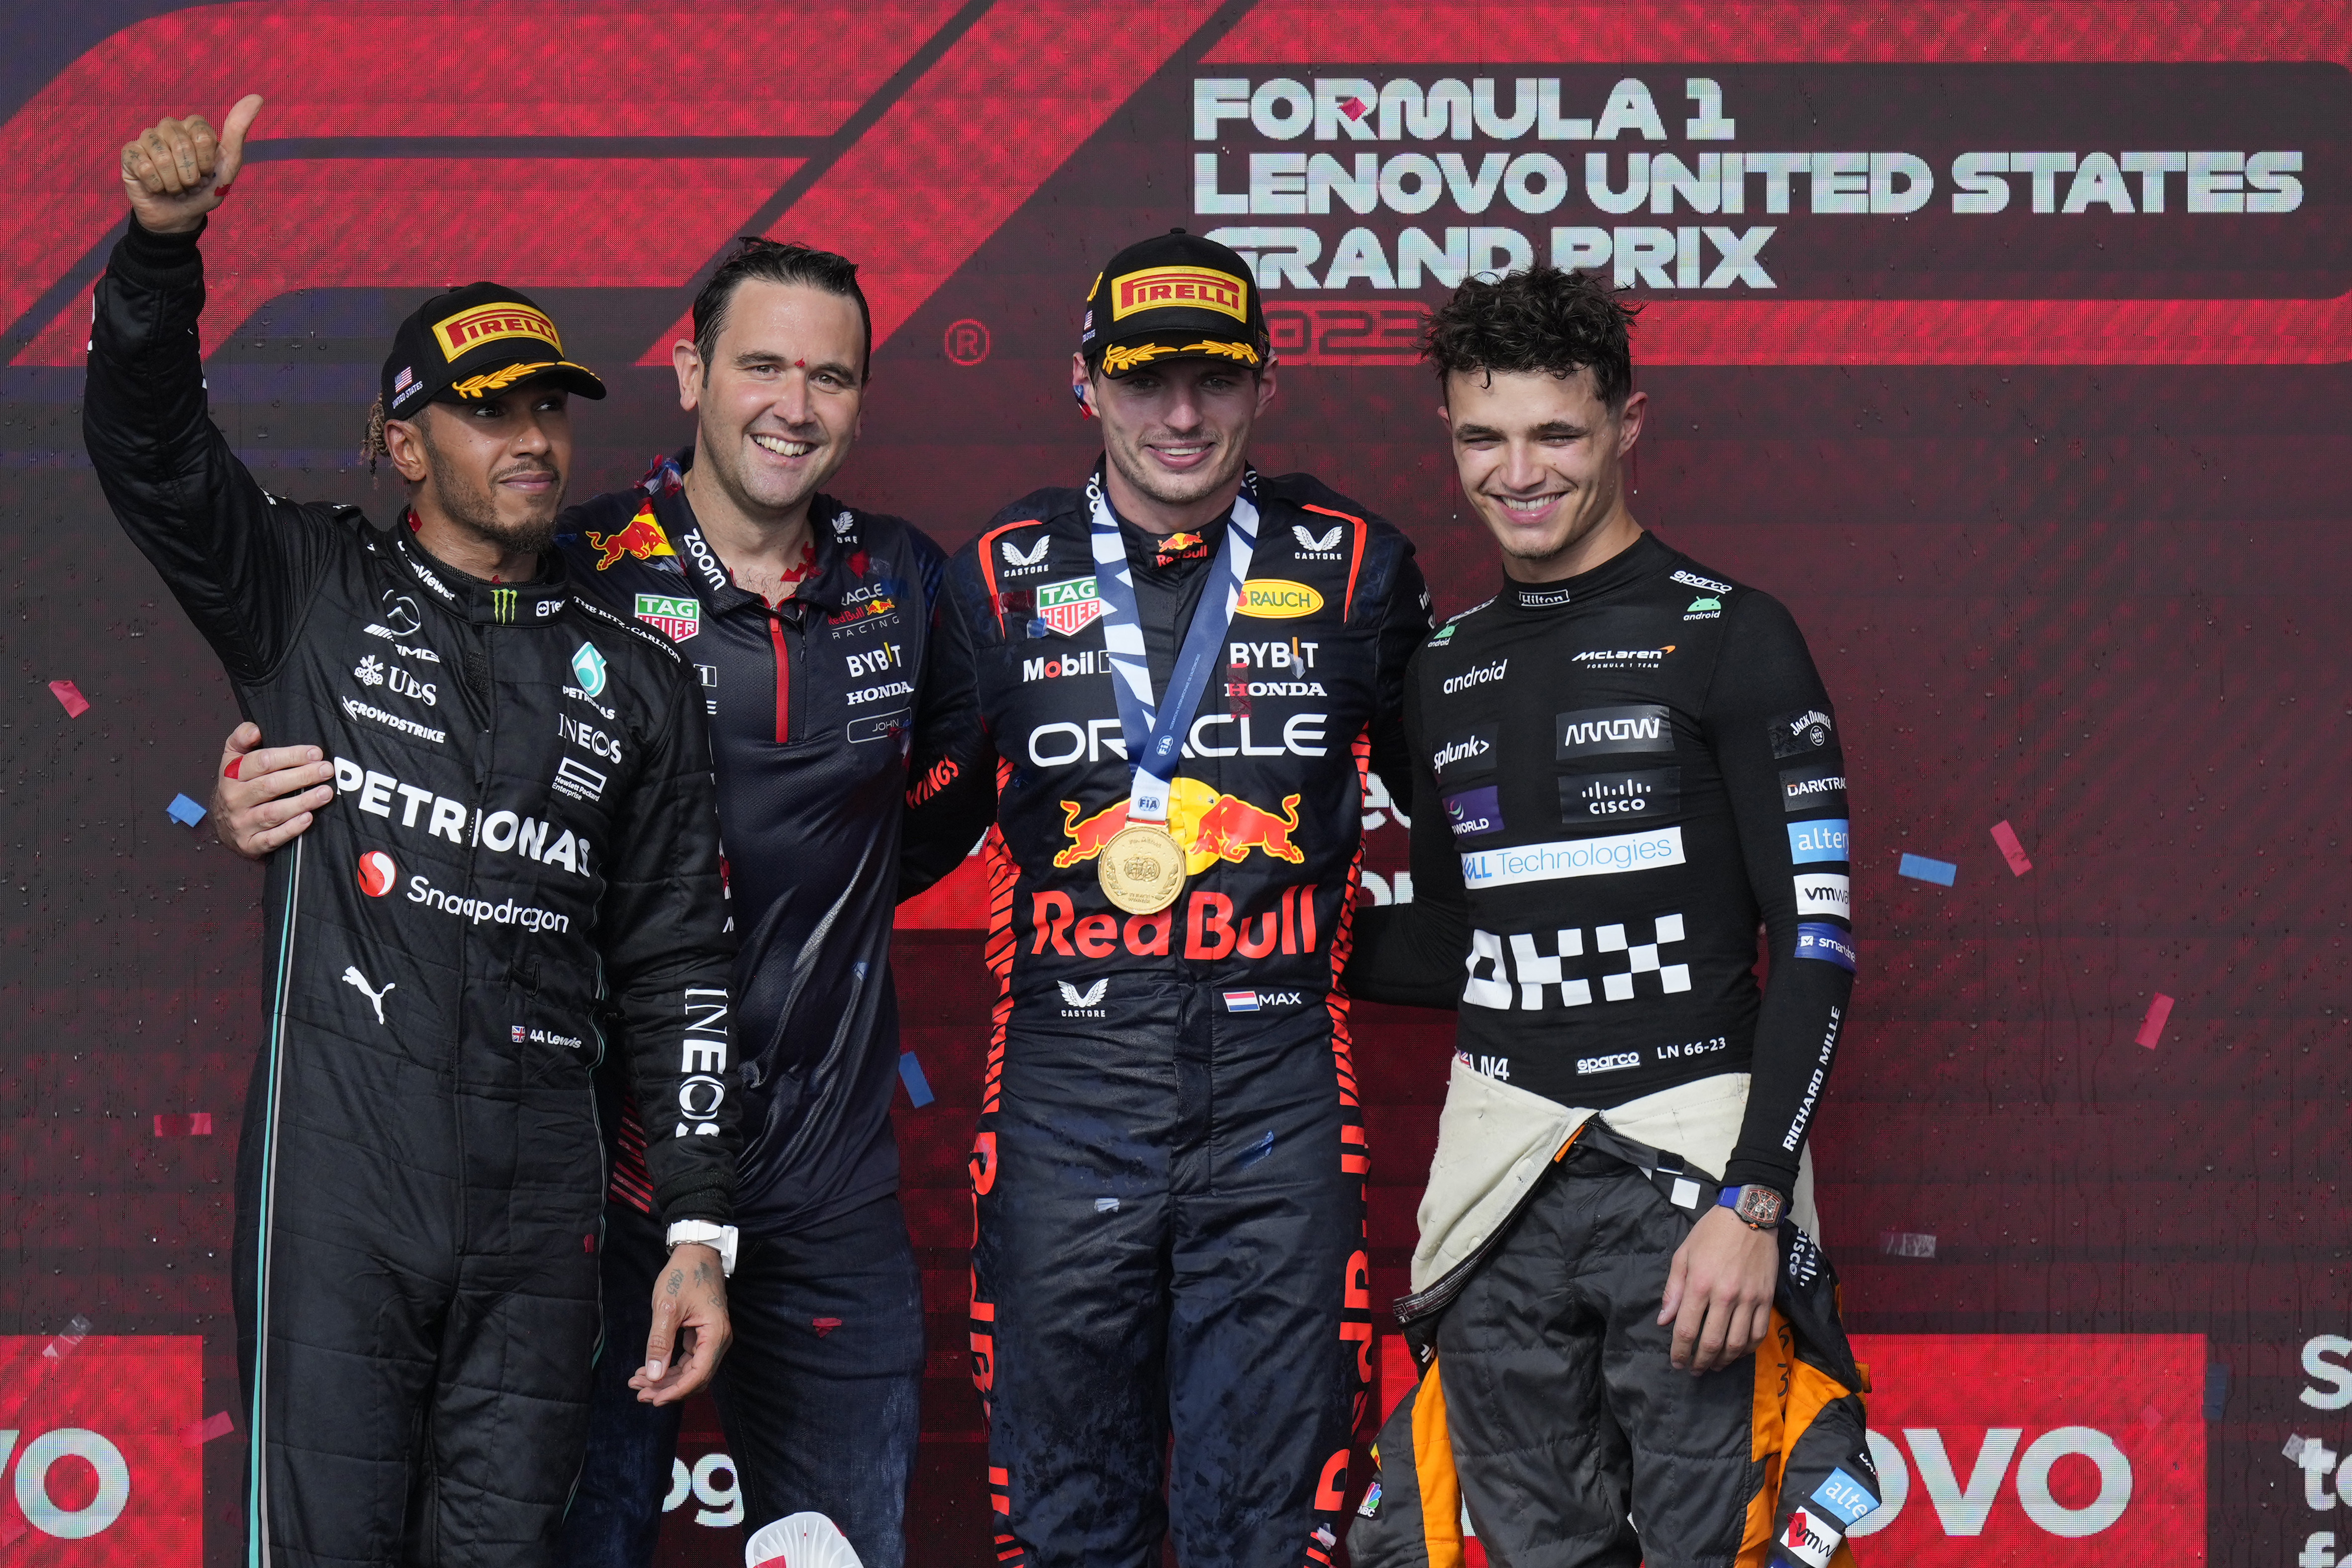 The podium at the US Grand Prix